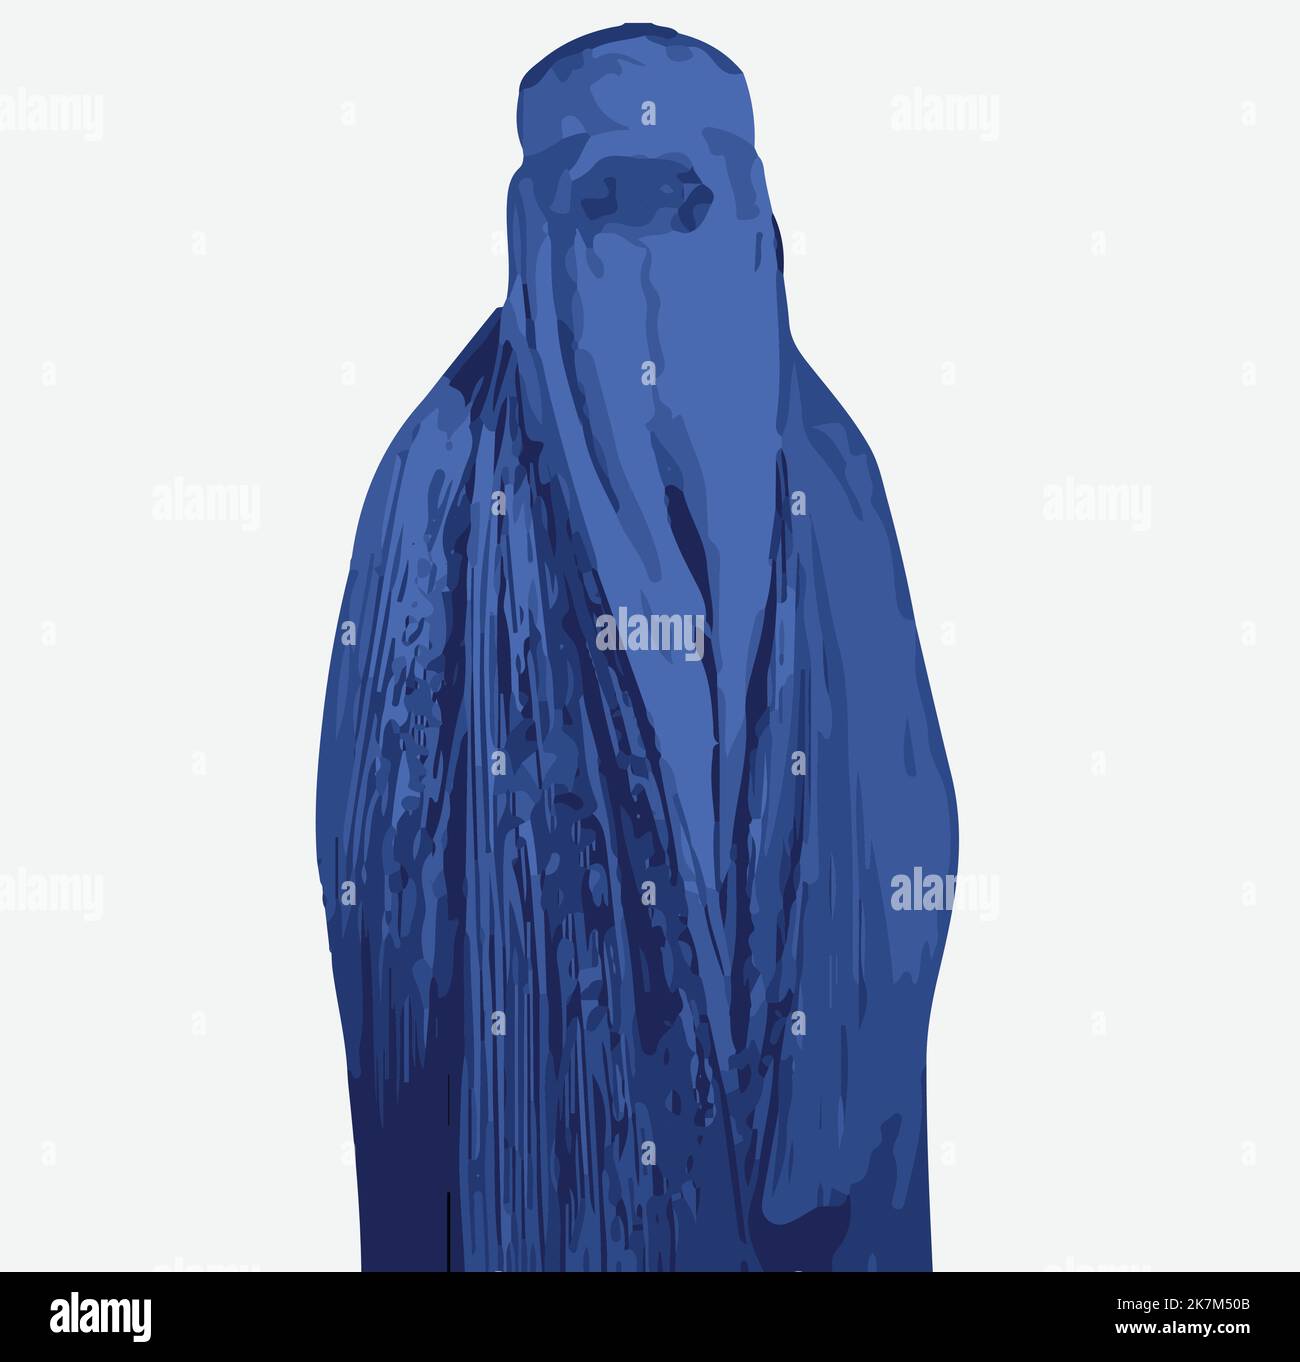 burqa, illustration muslim woman wearing burqa to cover body Stock Vector